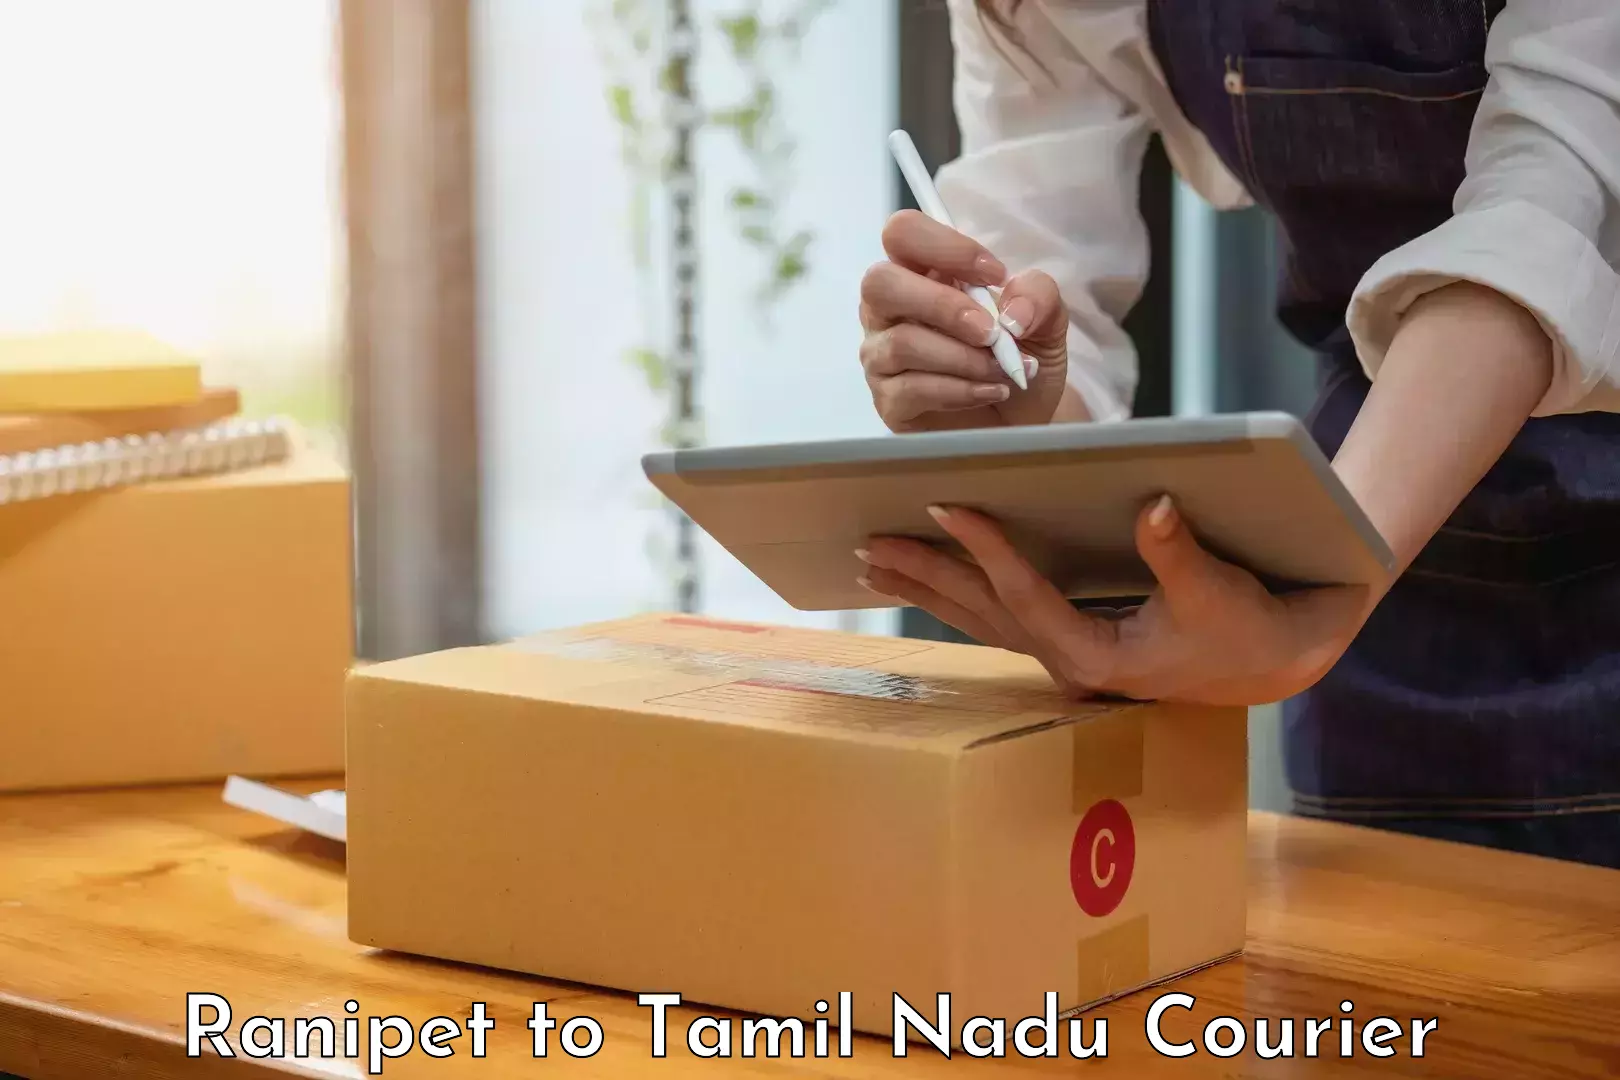 Courier rate comparison Ranipet to Tirunelveli